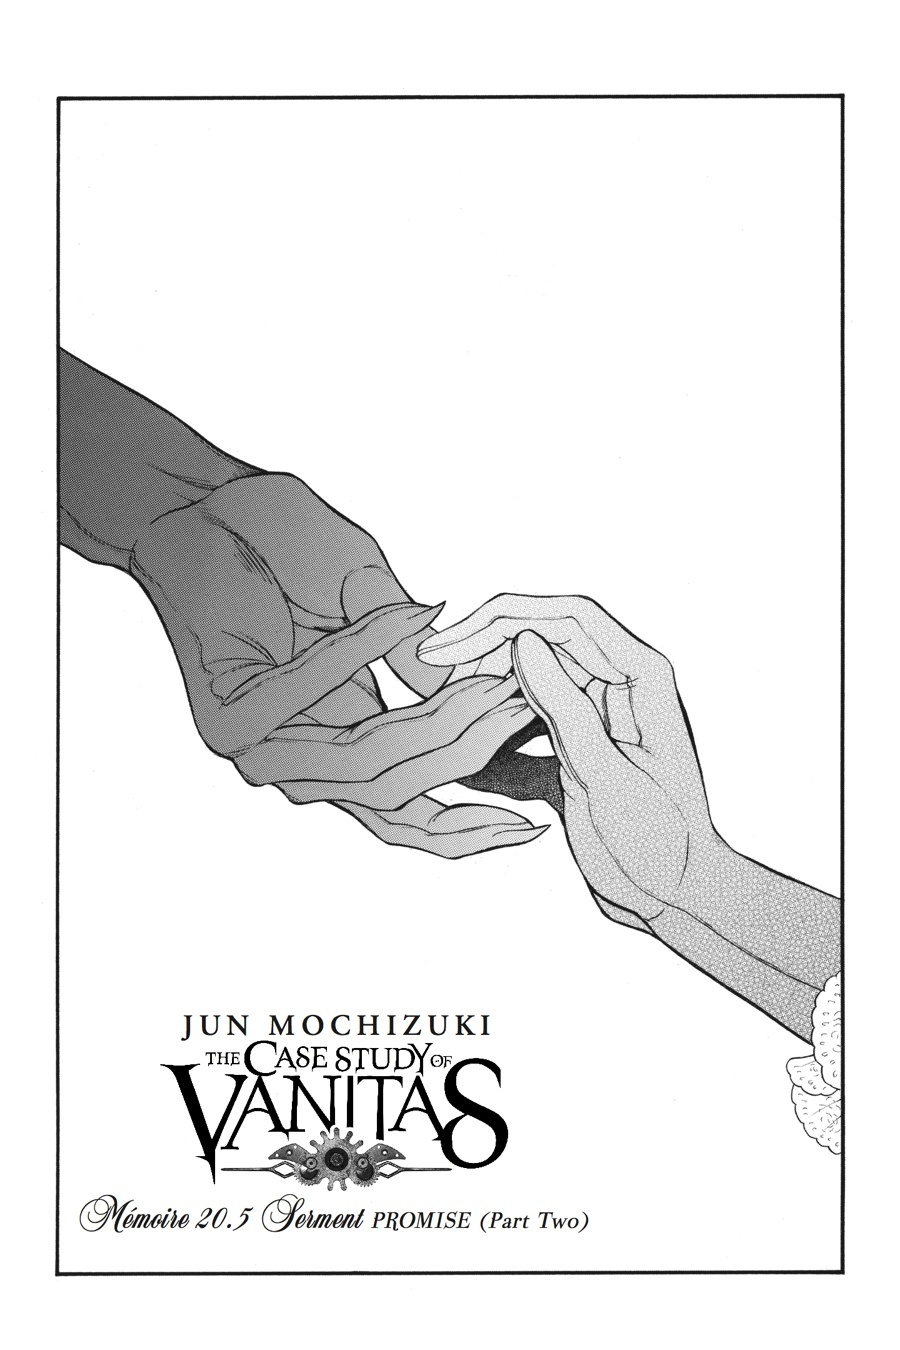 Les Mémoires de Vanitas (International)